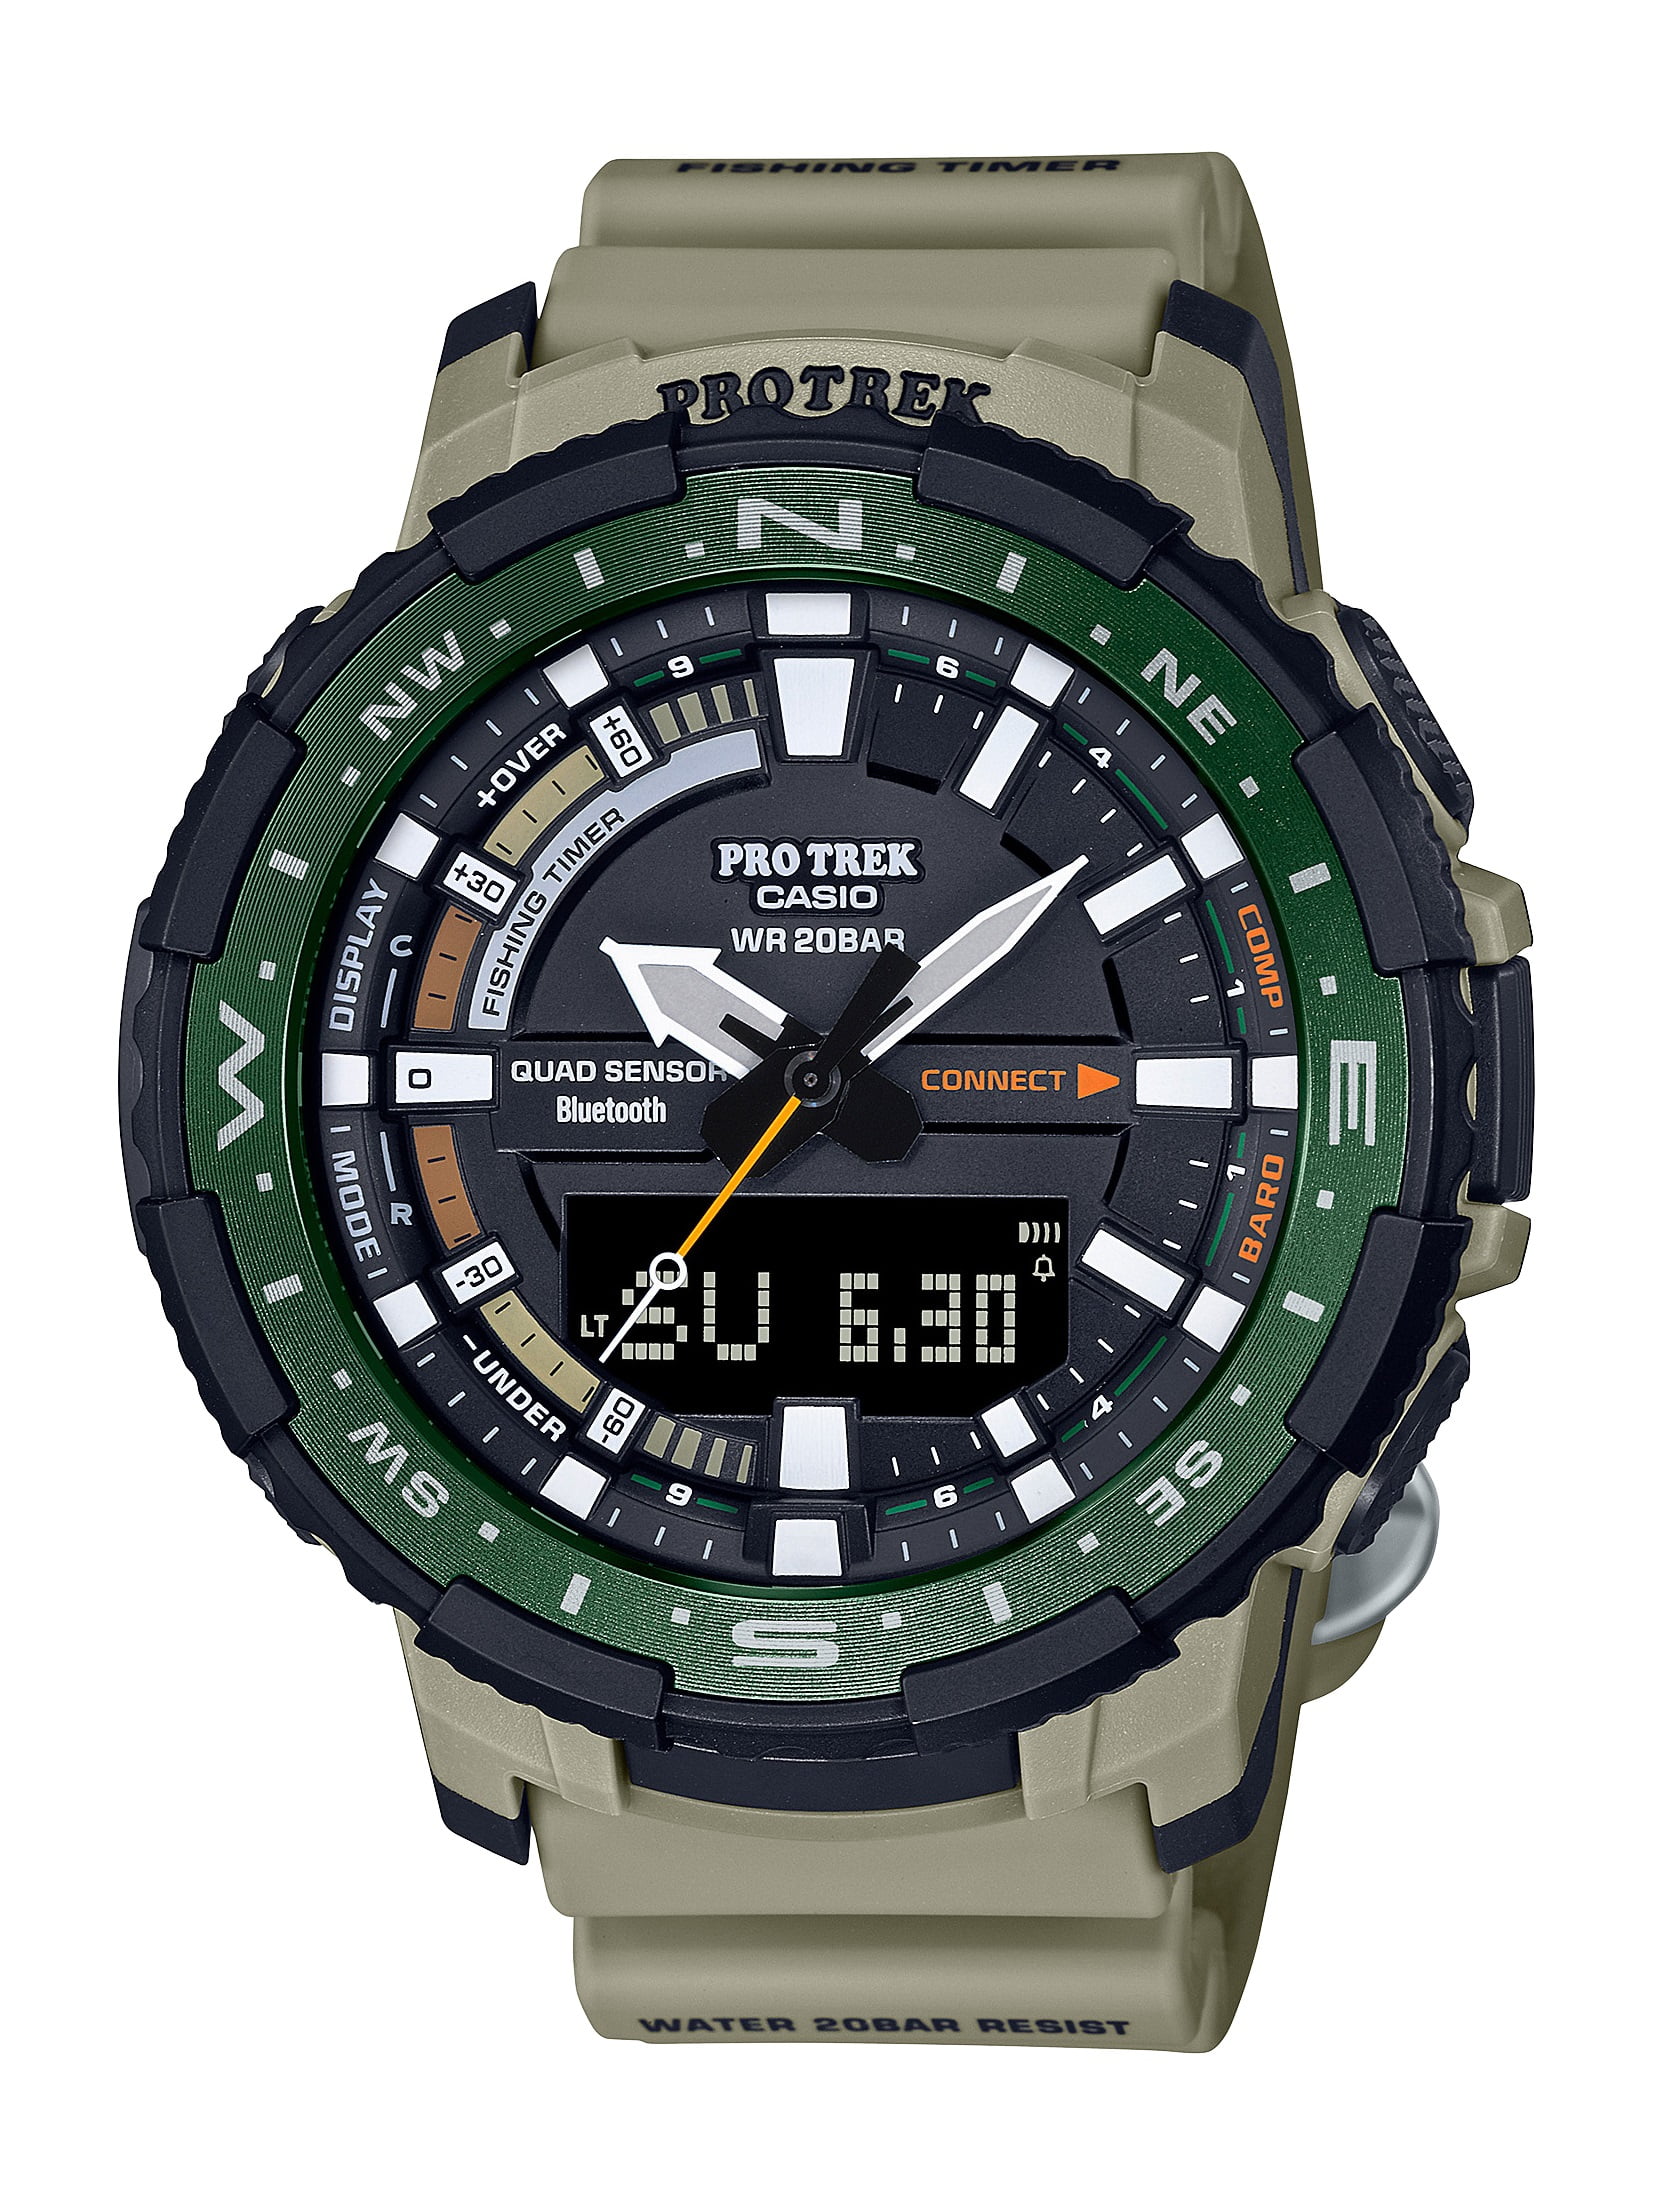 Casio ProTrek Quad Sensor Fishing Timer Bluetooth Titanium Band Watch  PRT-B70YT-1